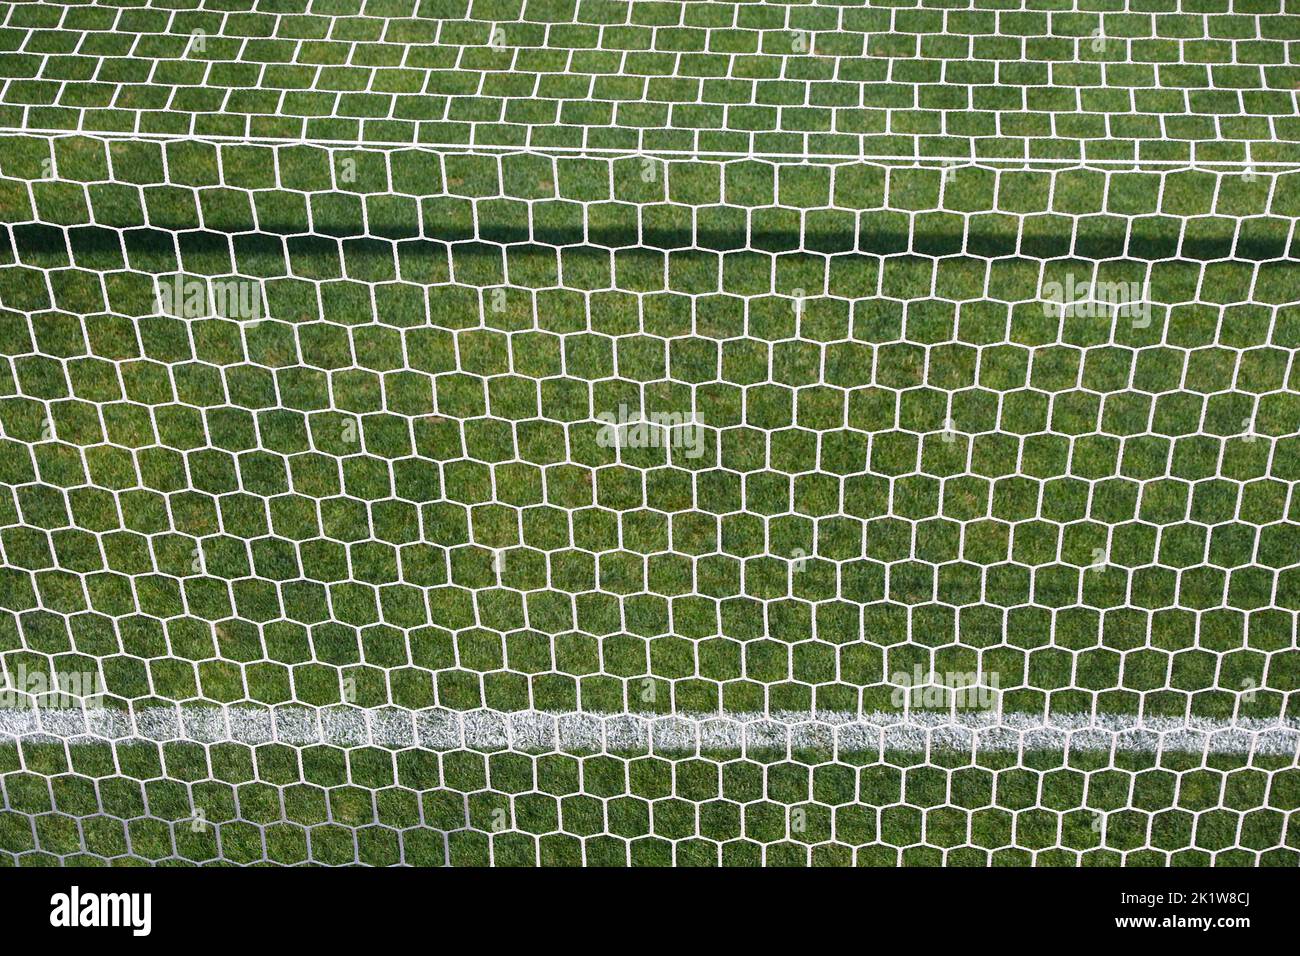 Goal net, details of football soccer stadium. View behind the net Stock Photo